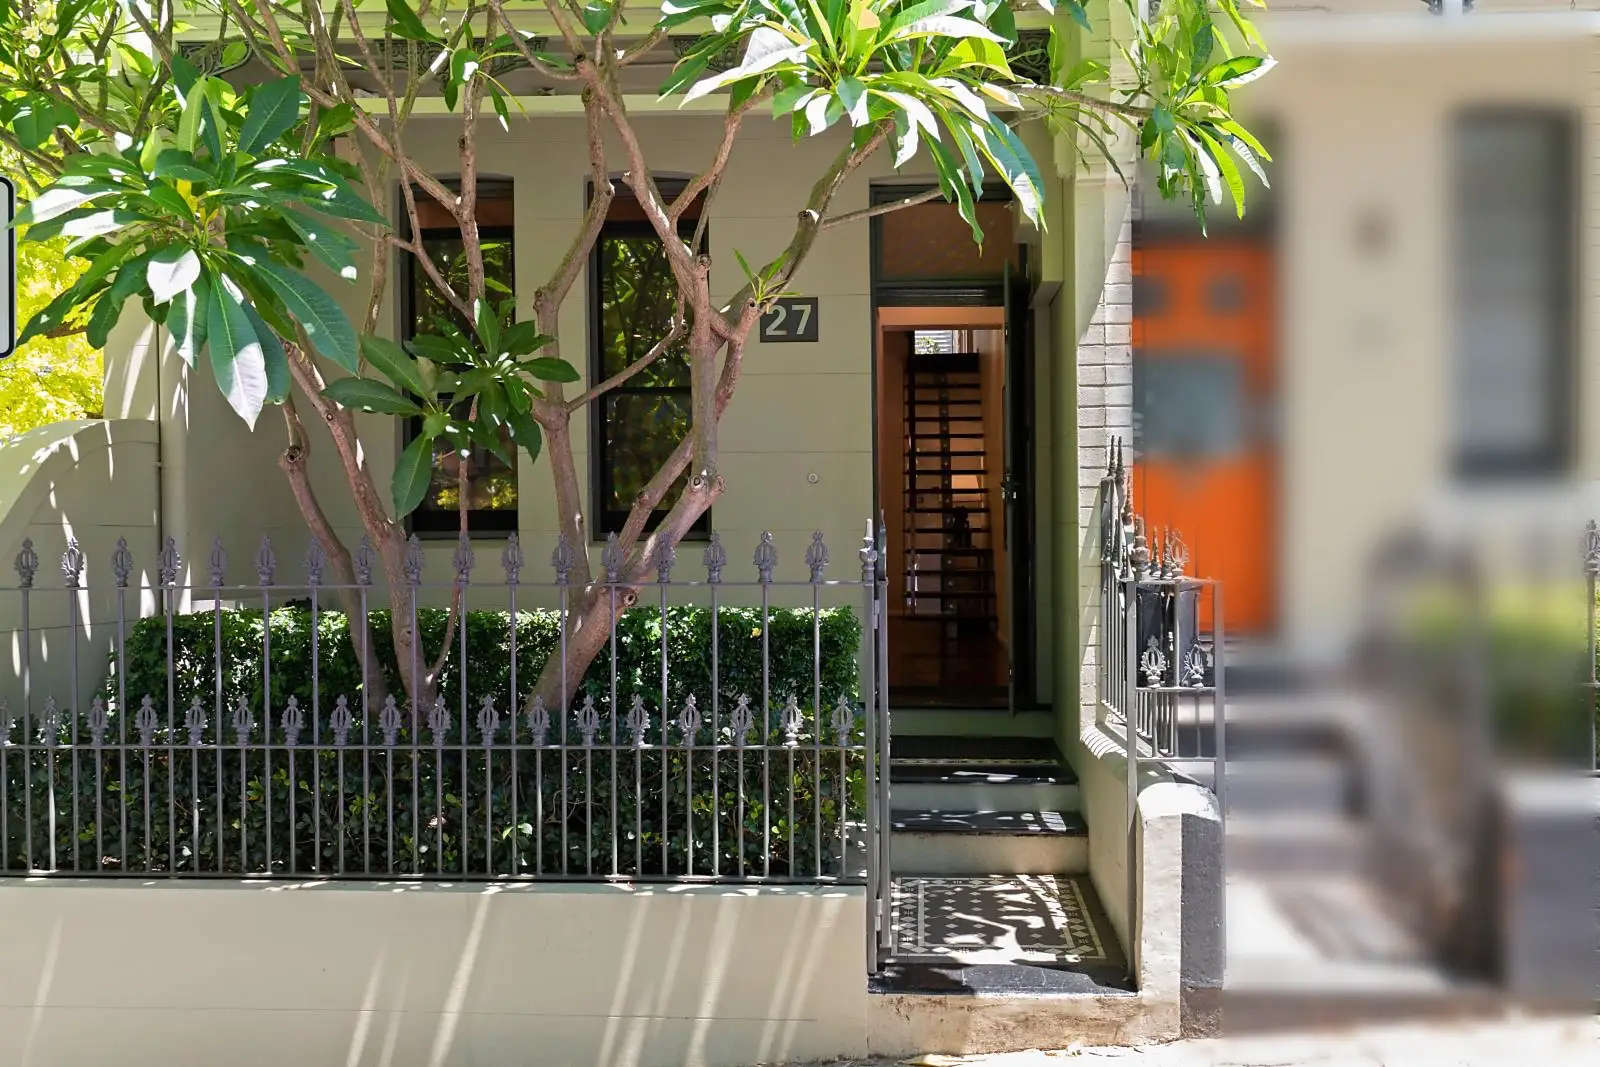 27 West Avenue, Darlinghurst Sold by Sydney Sotheby's International Realty - image 2